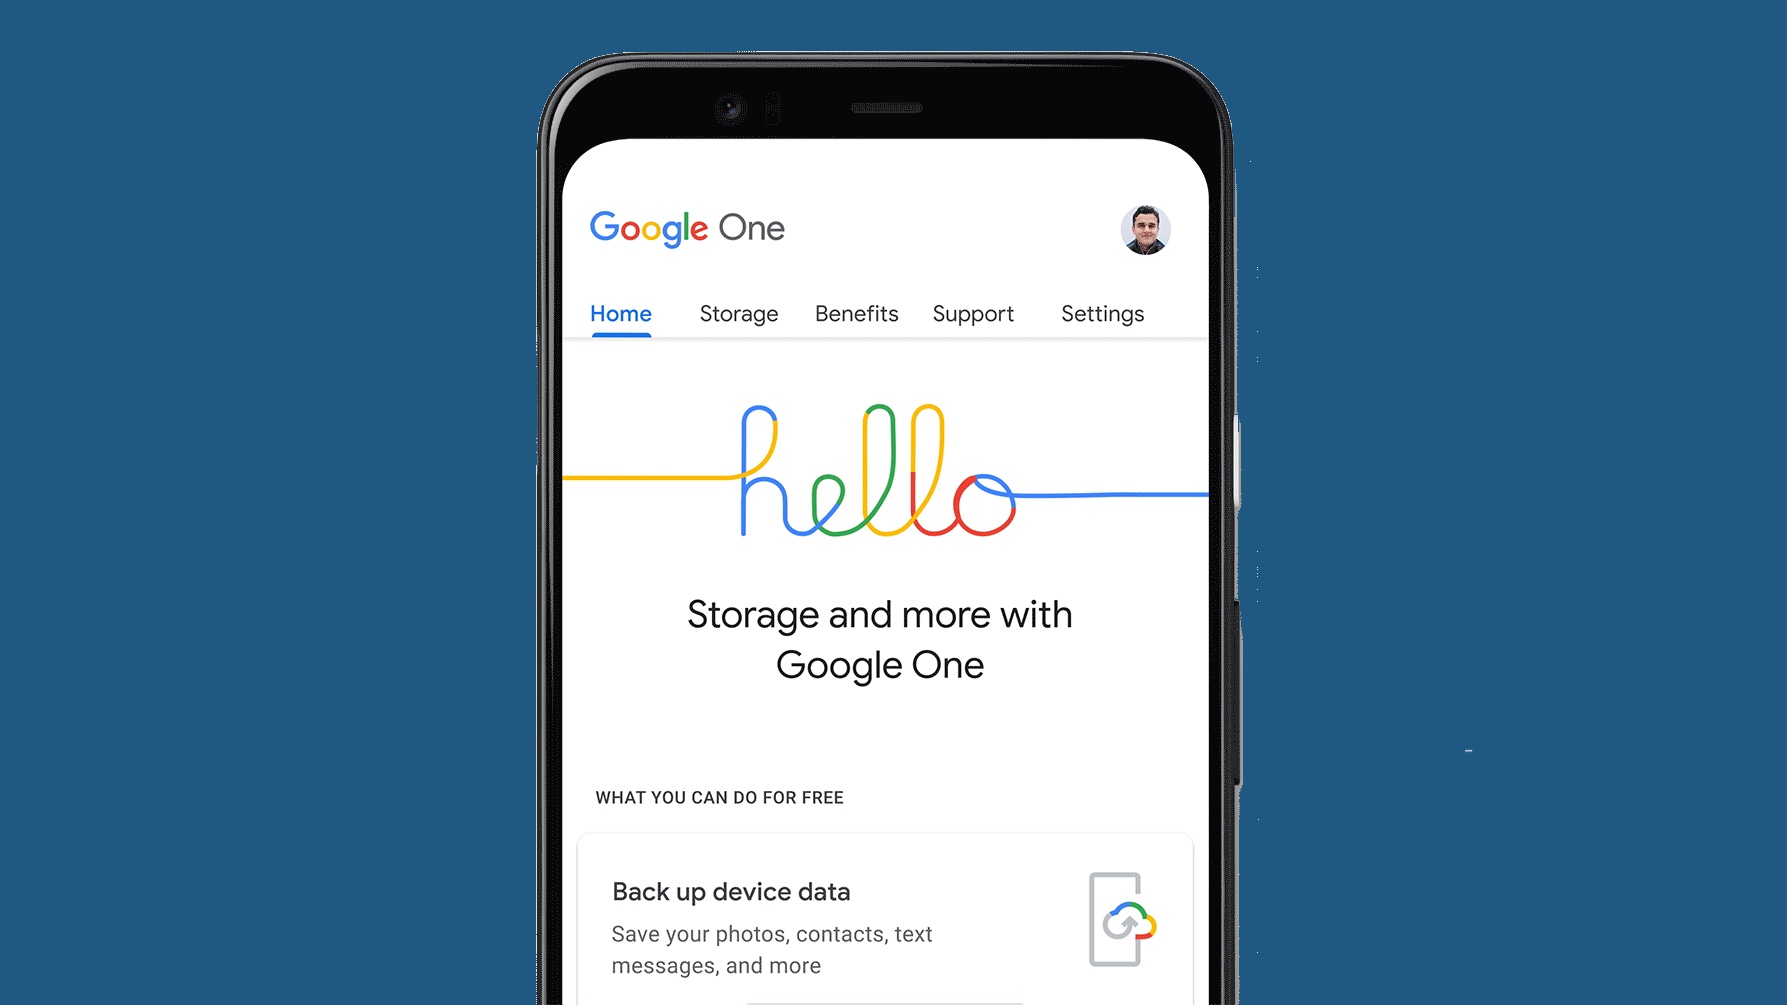 google cloud storage free